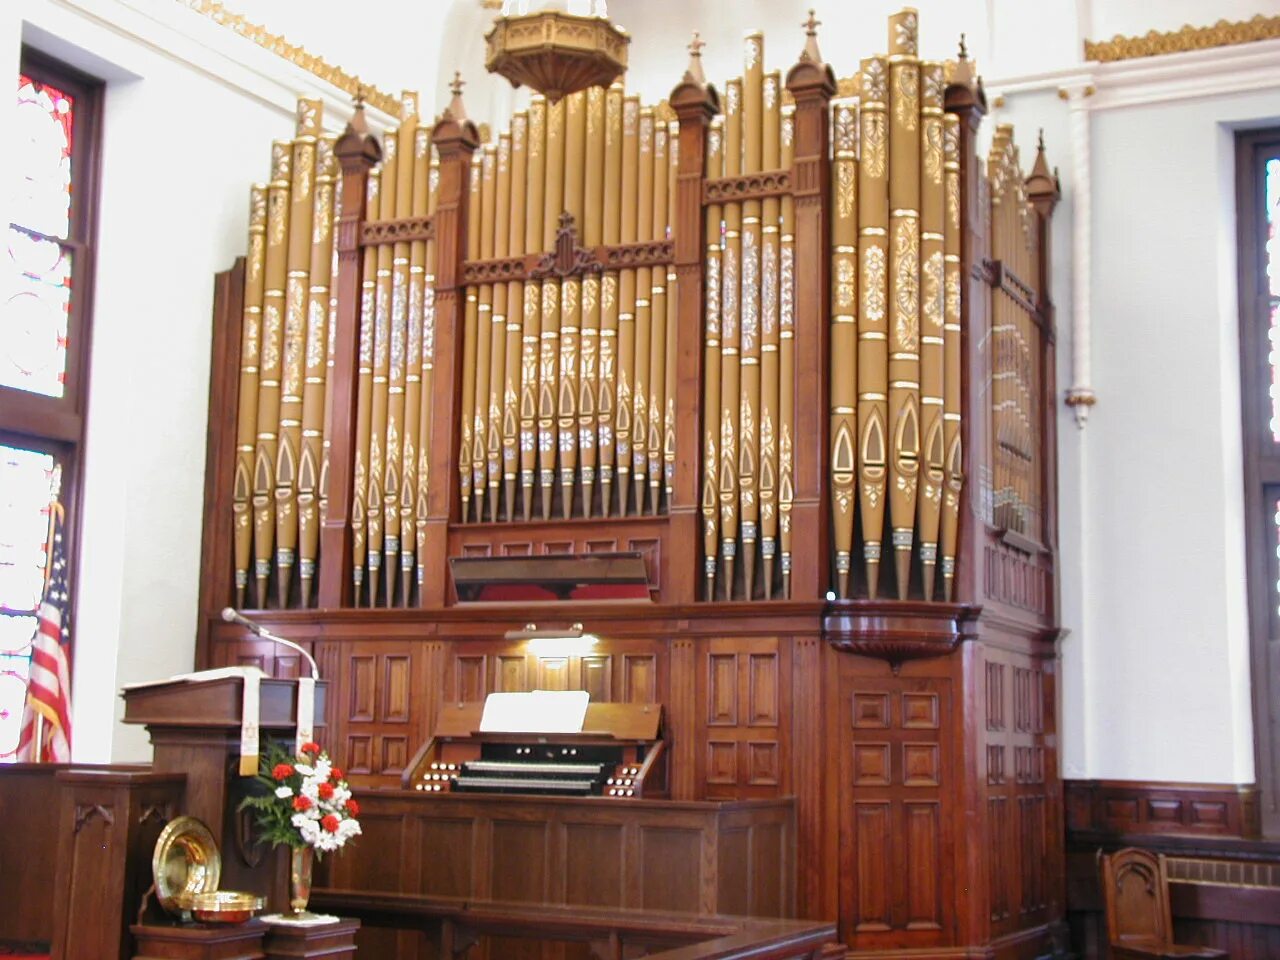 Organ. Орган Роджерс 577. Wizard 325 Organ итальянский орган. Орган Зауэр Берлинский собор. Opus 1738, 26/II/P орган.